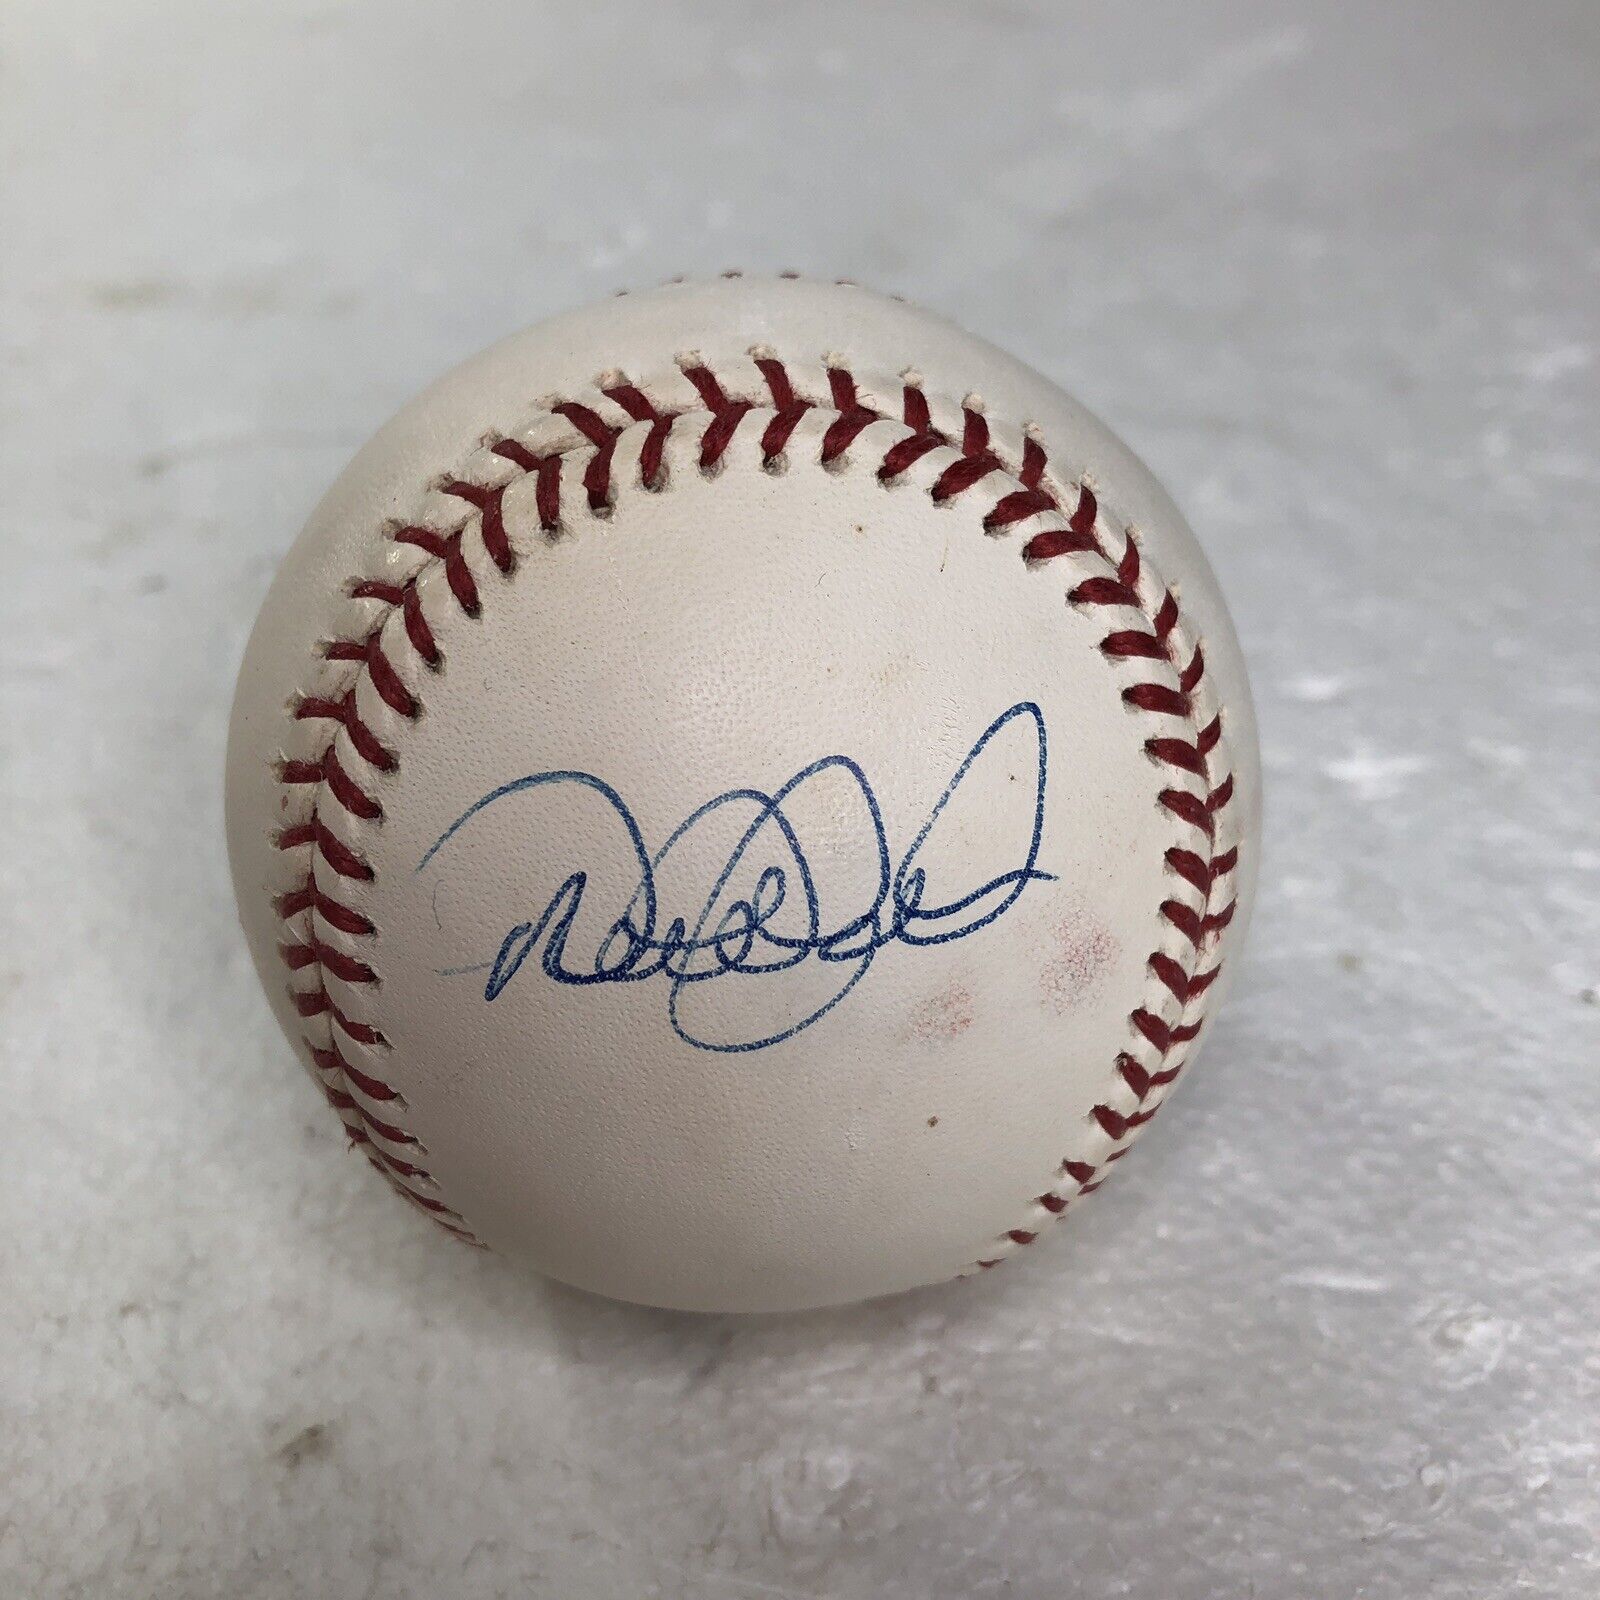 Authentic Derek Jeter Autograph Signed Auto OML Baseball w/ BAS Signature Review